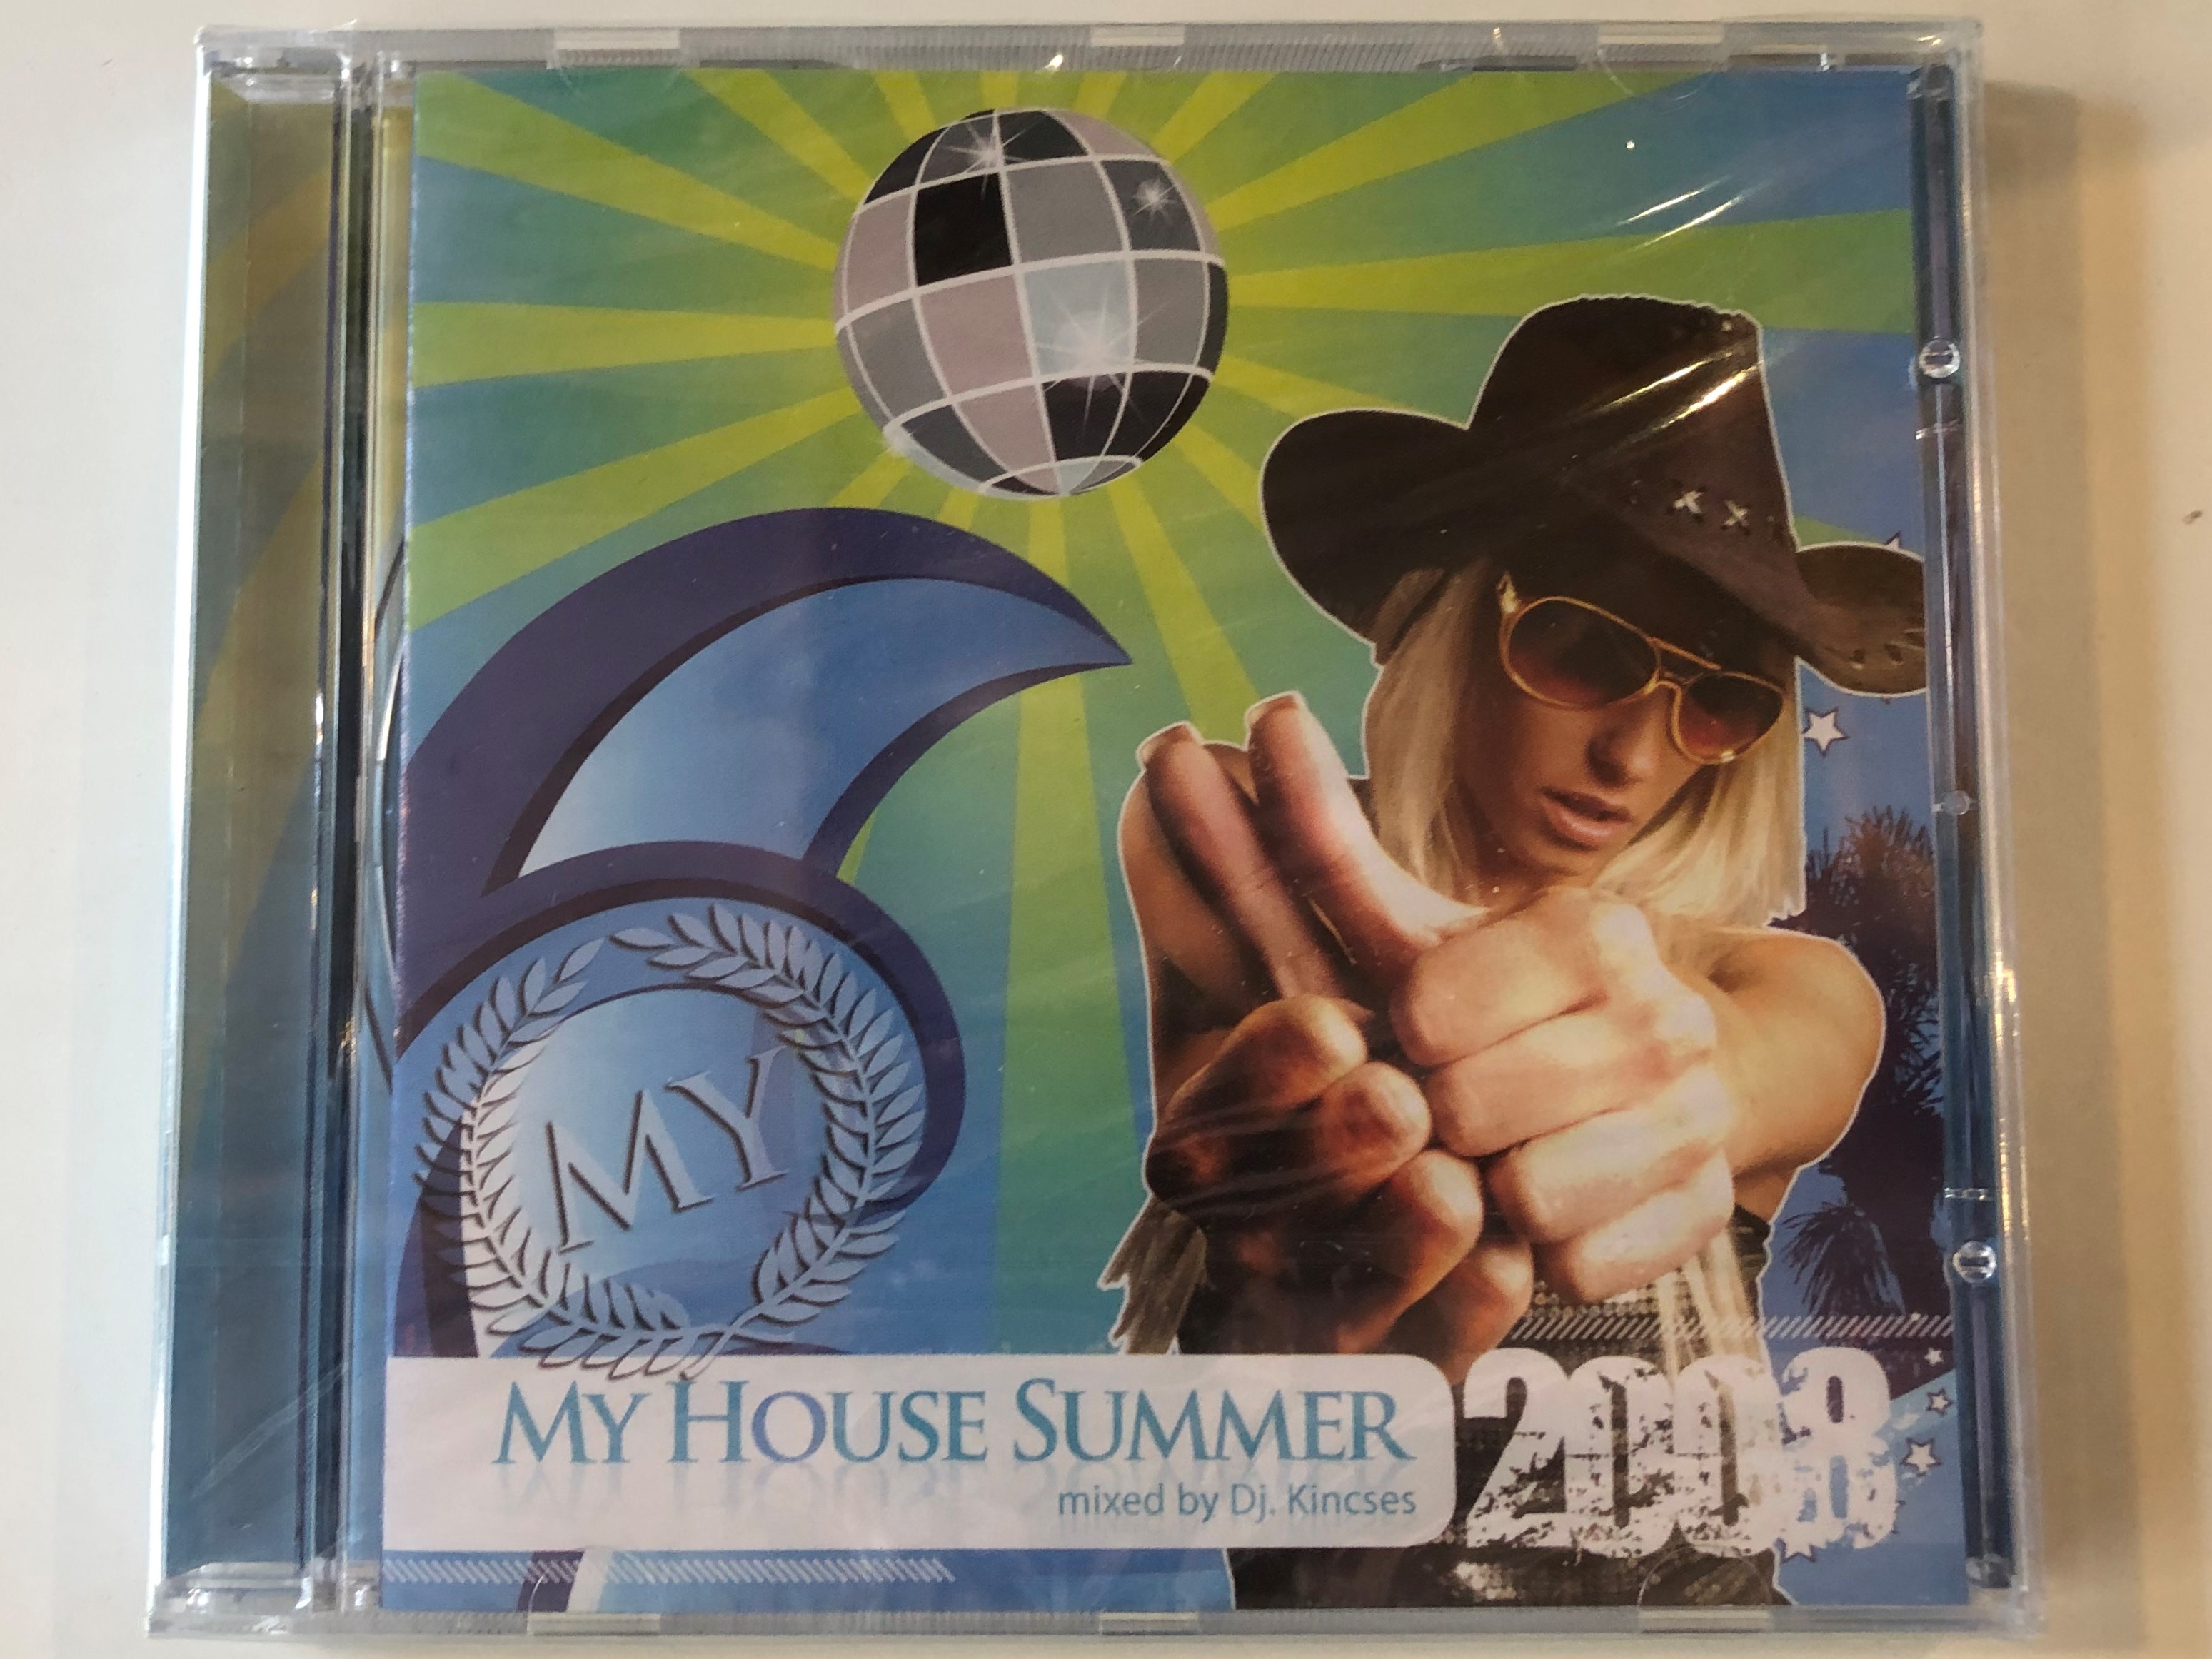 my-house-summer-2008-mixed-by-dj.-kincses-cls-audio-cd-2008-cls-sa153-2-1-.jpg